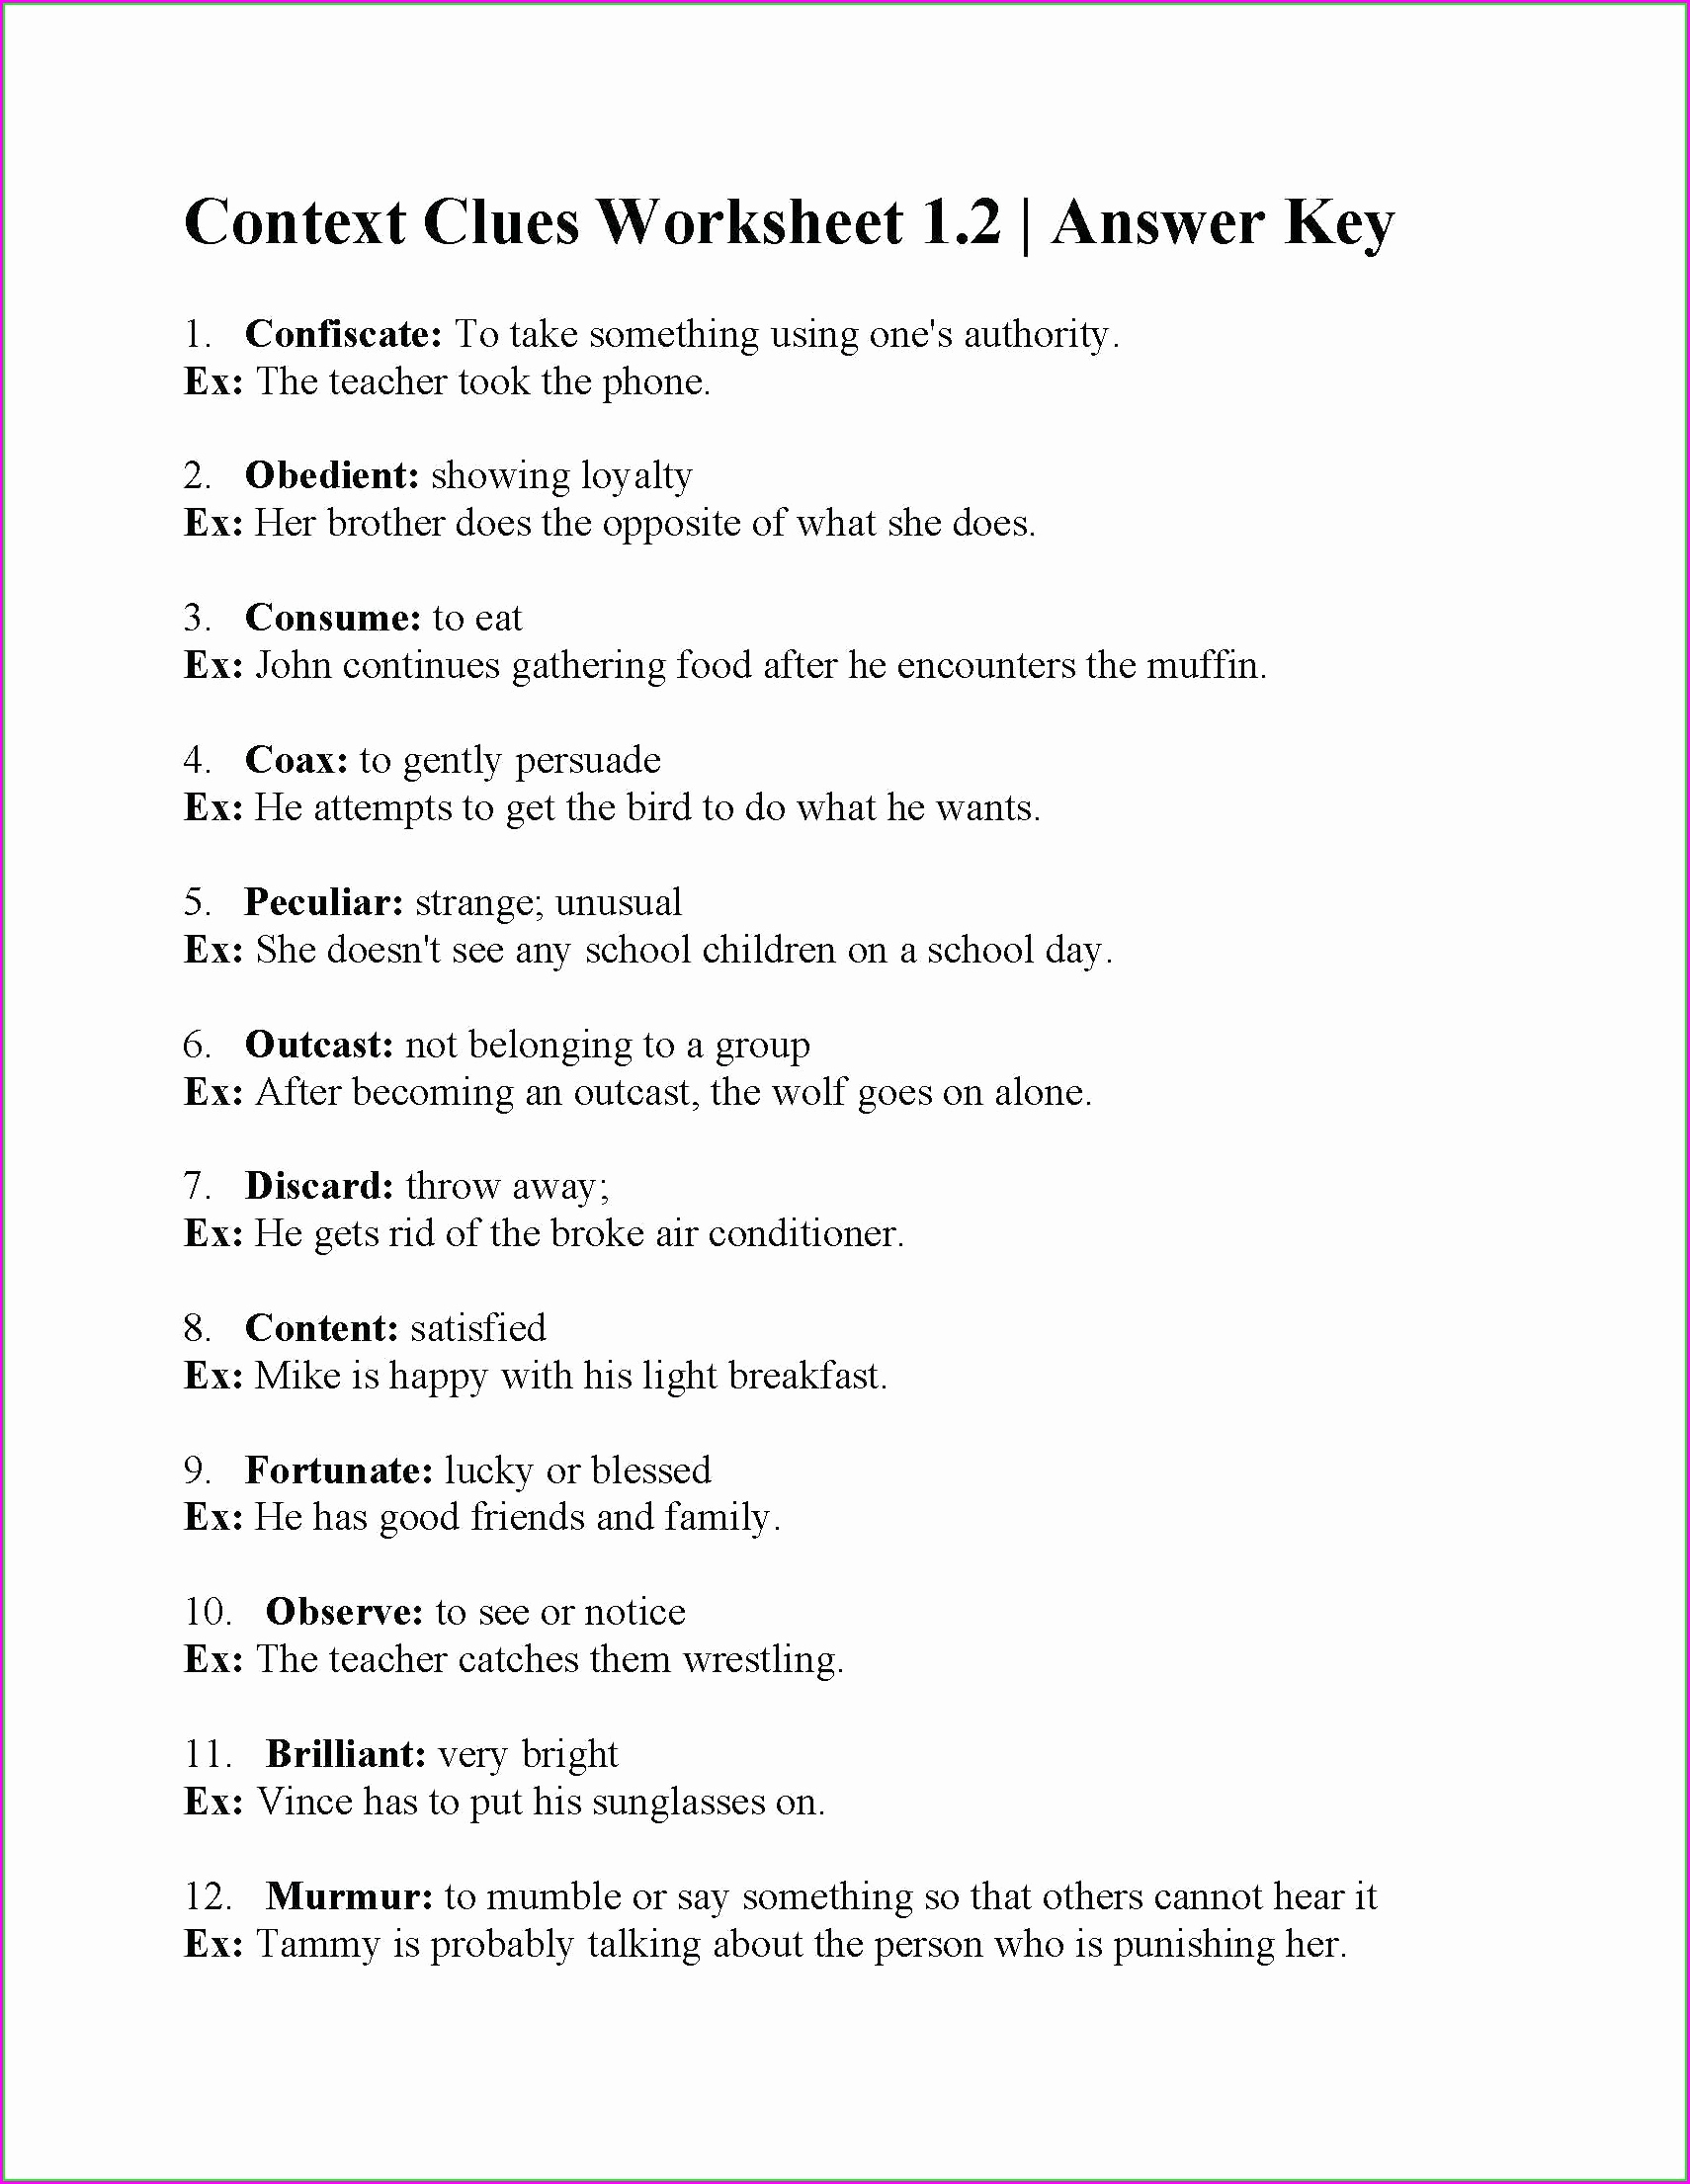 Context Clues Worksheets Second Grade Inspirational Word Meaning In Context Worksheets 2nd Grade Worksheet